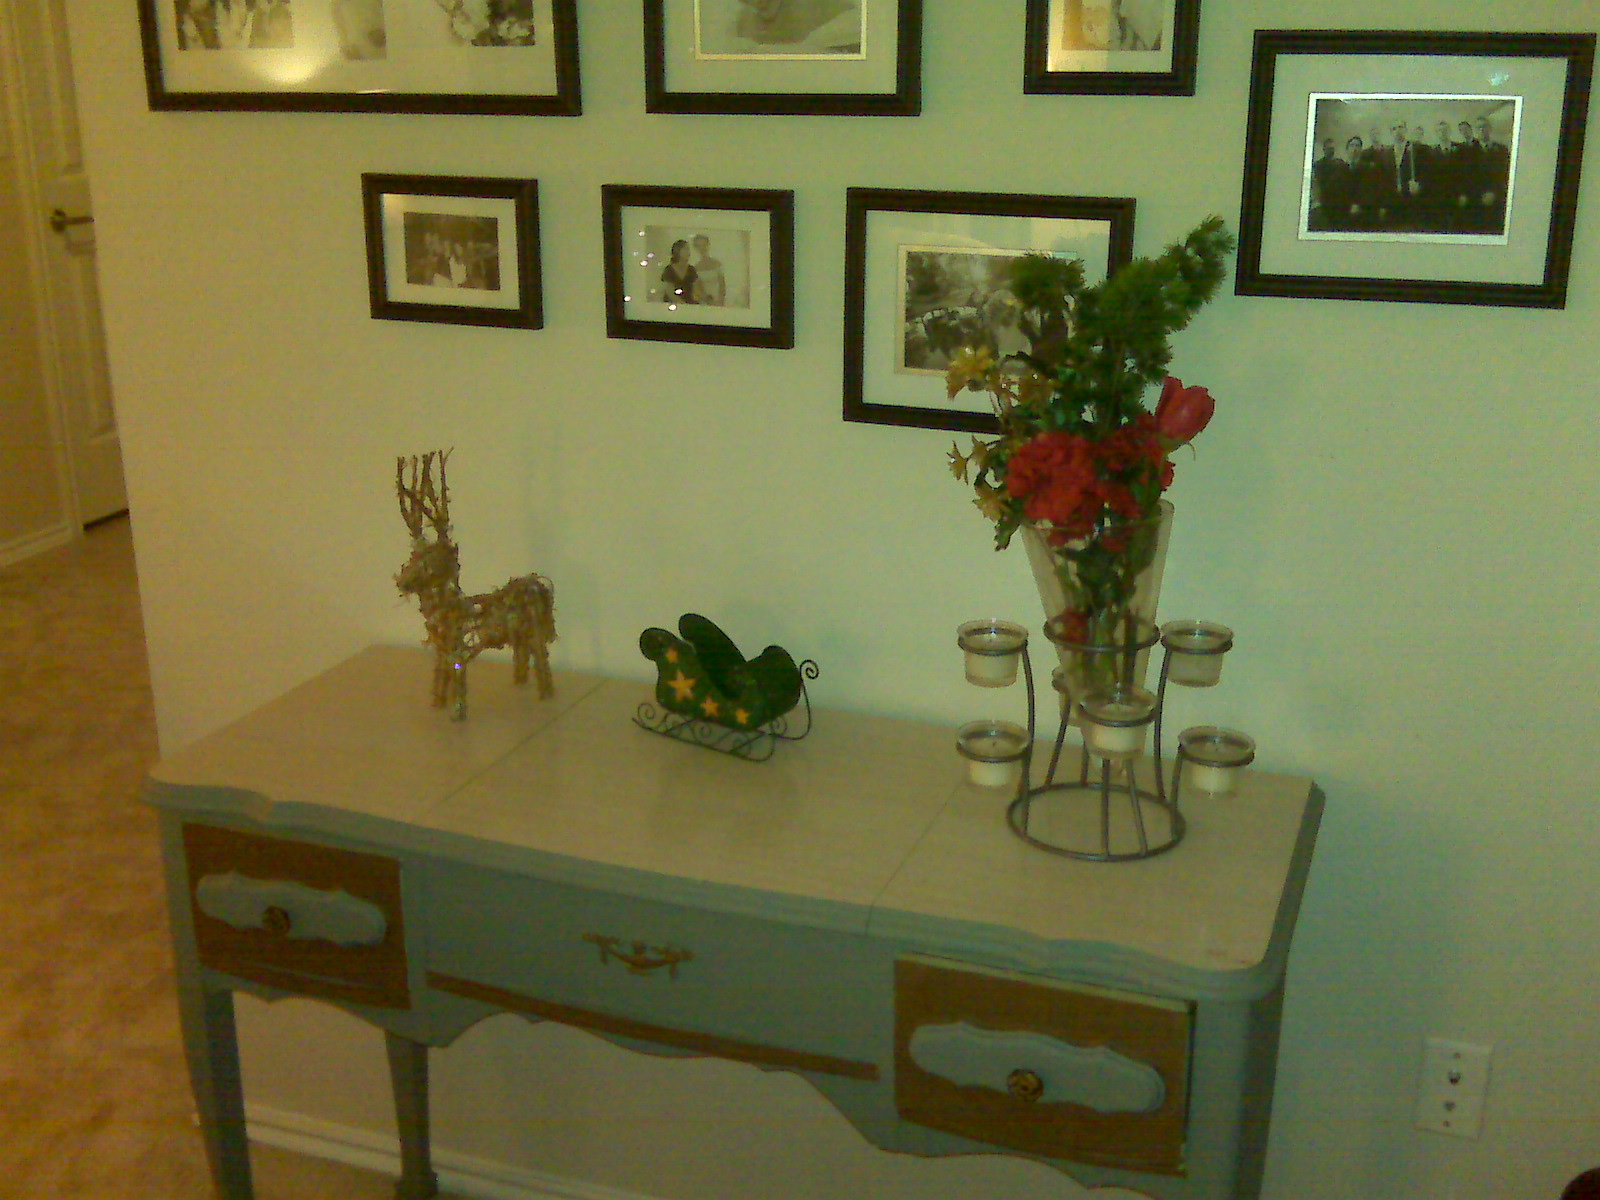 Our Christmas flowers, reindeer and sleigh